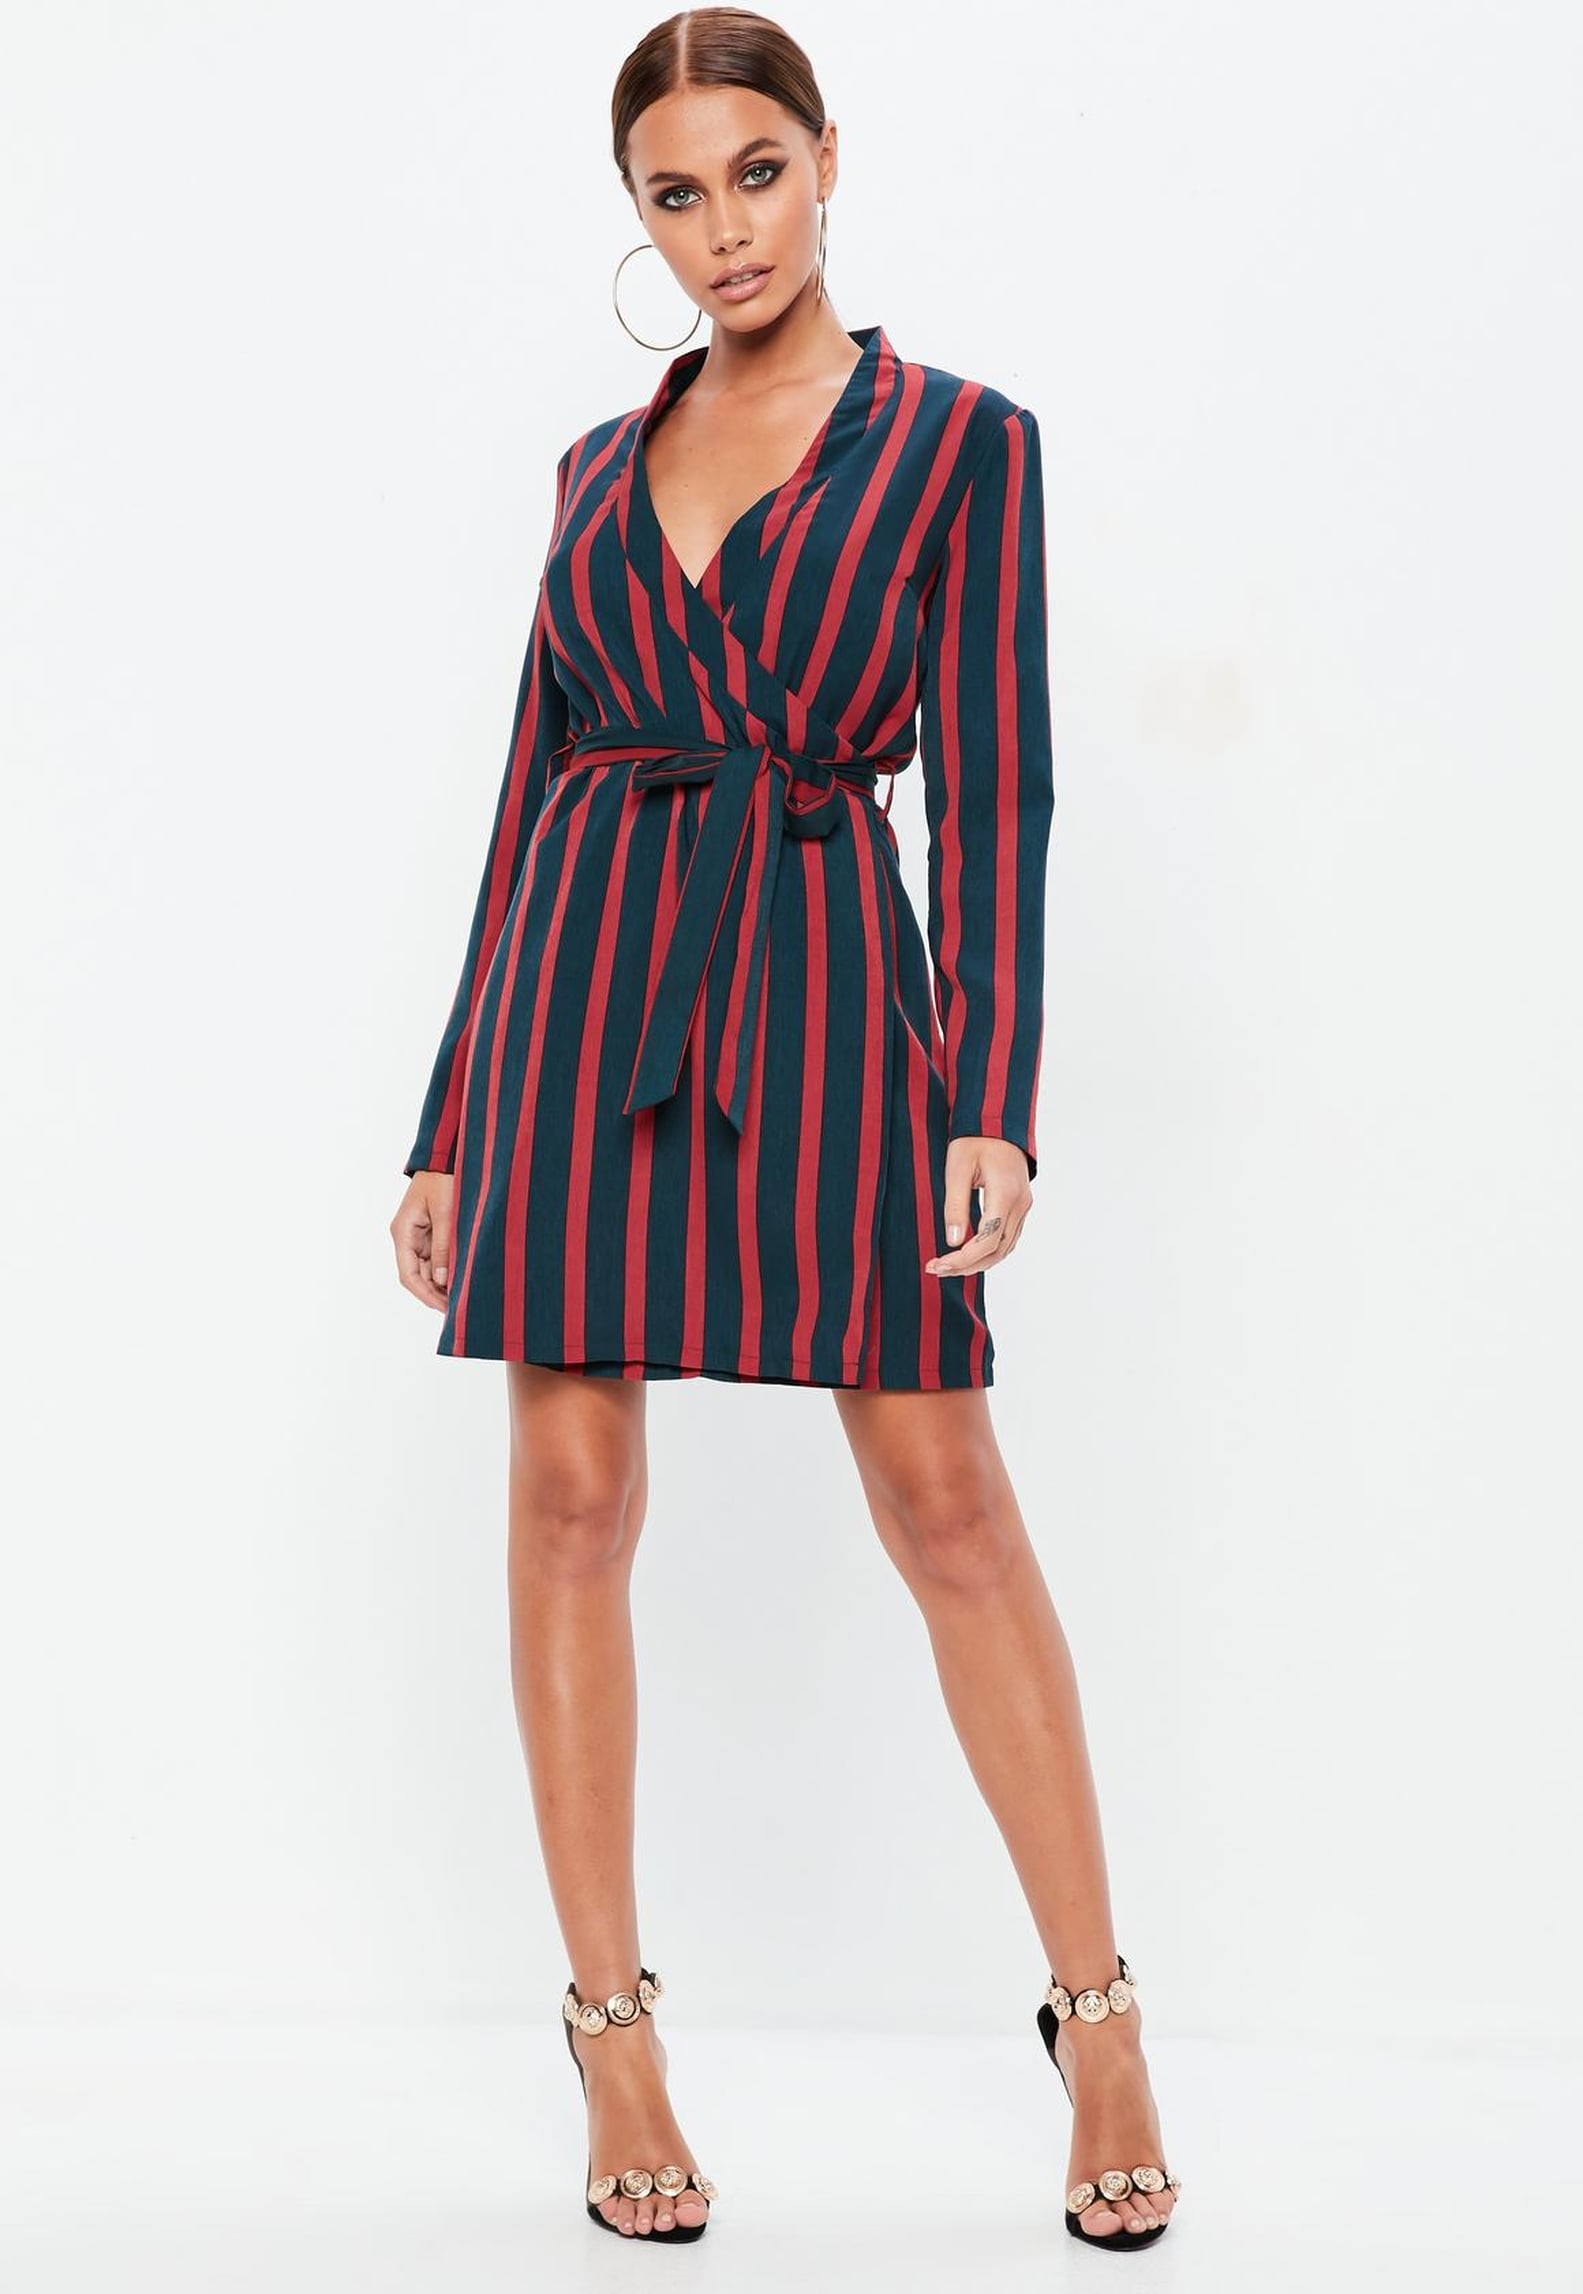 Emily Ratajkowski Pinstripe Blazer Dress LPA | POPSUGAR Fashion